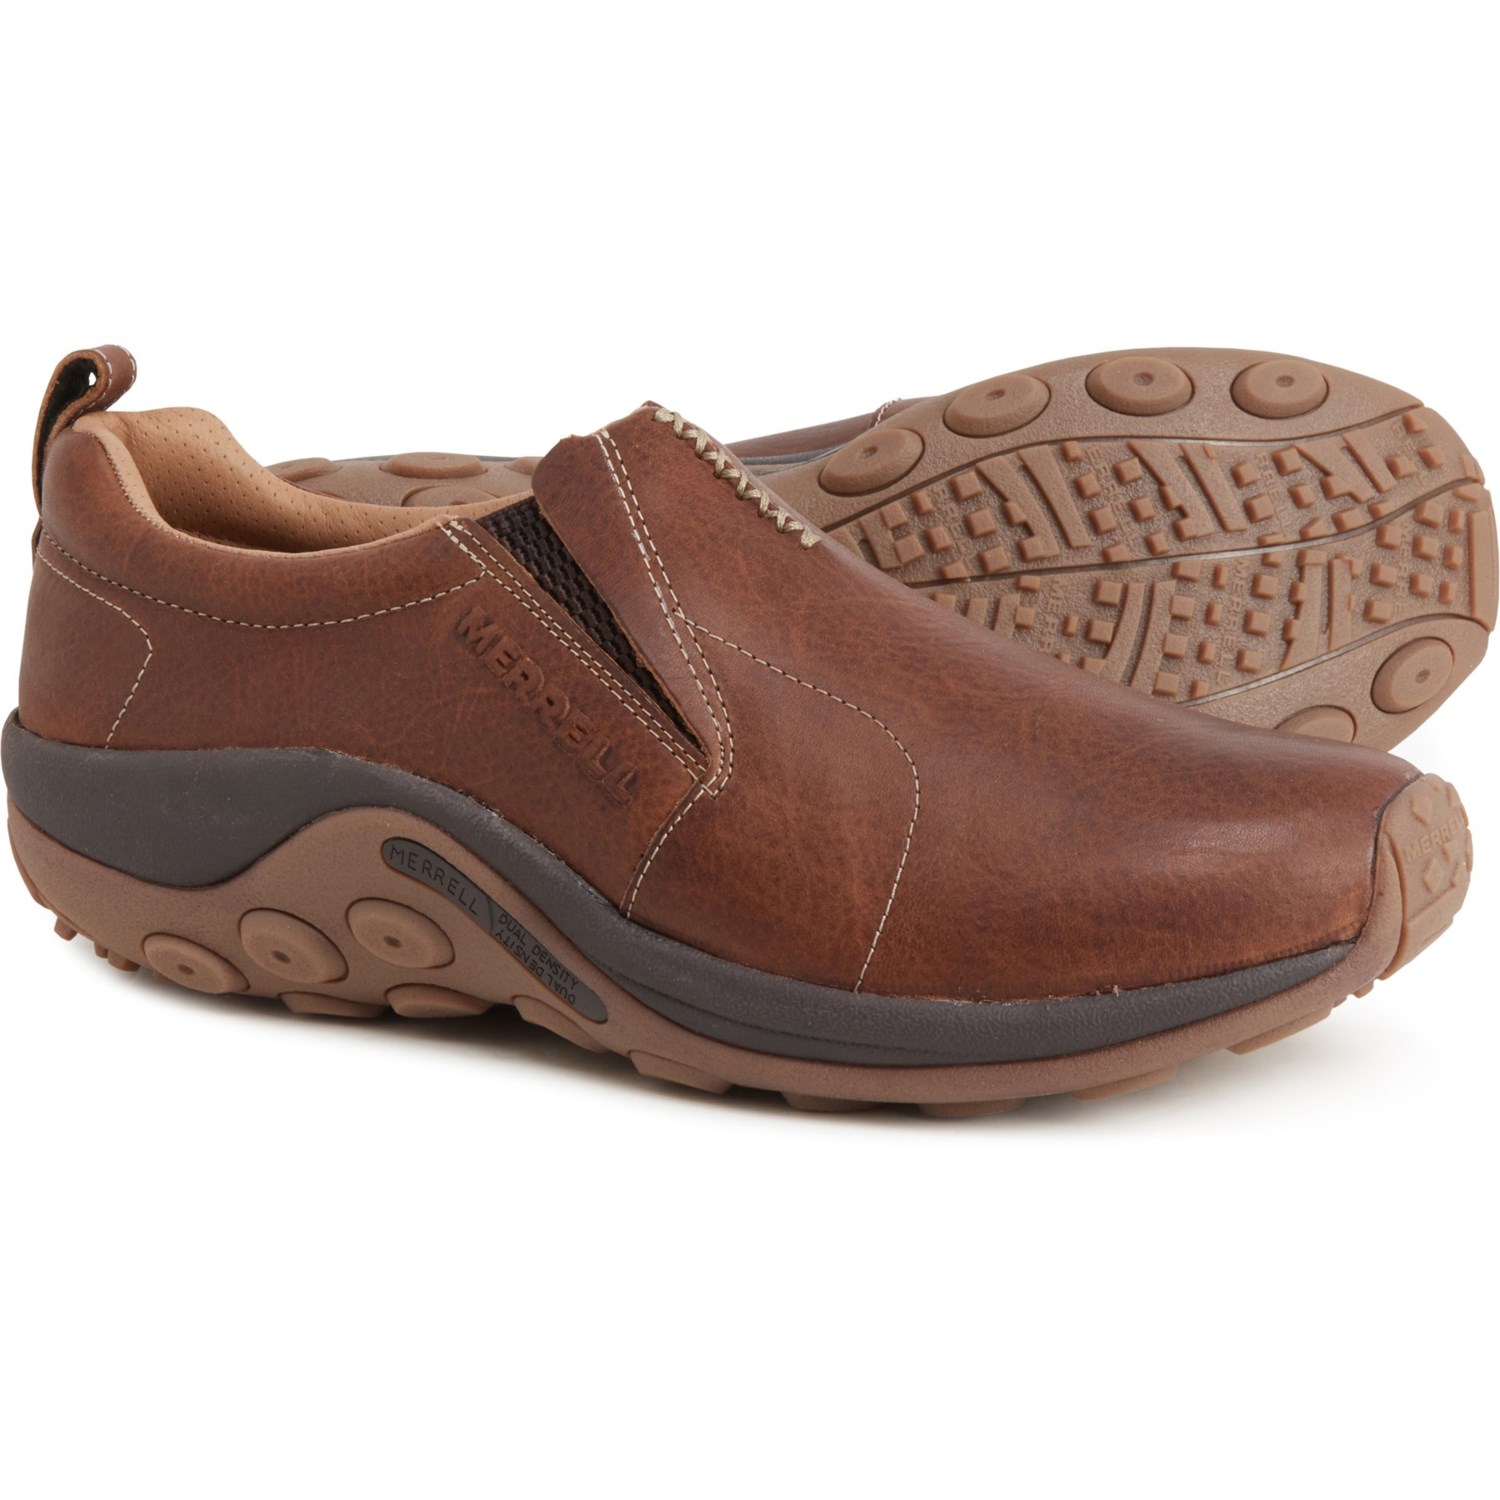 Merrell Jungle Moc Shoes (For Men) - Save 33%